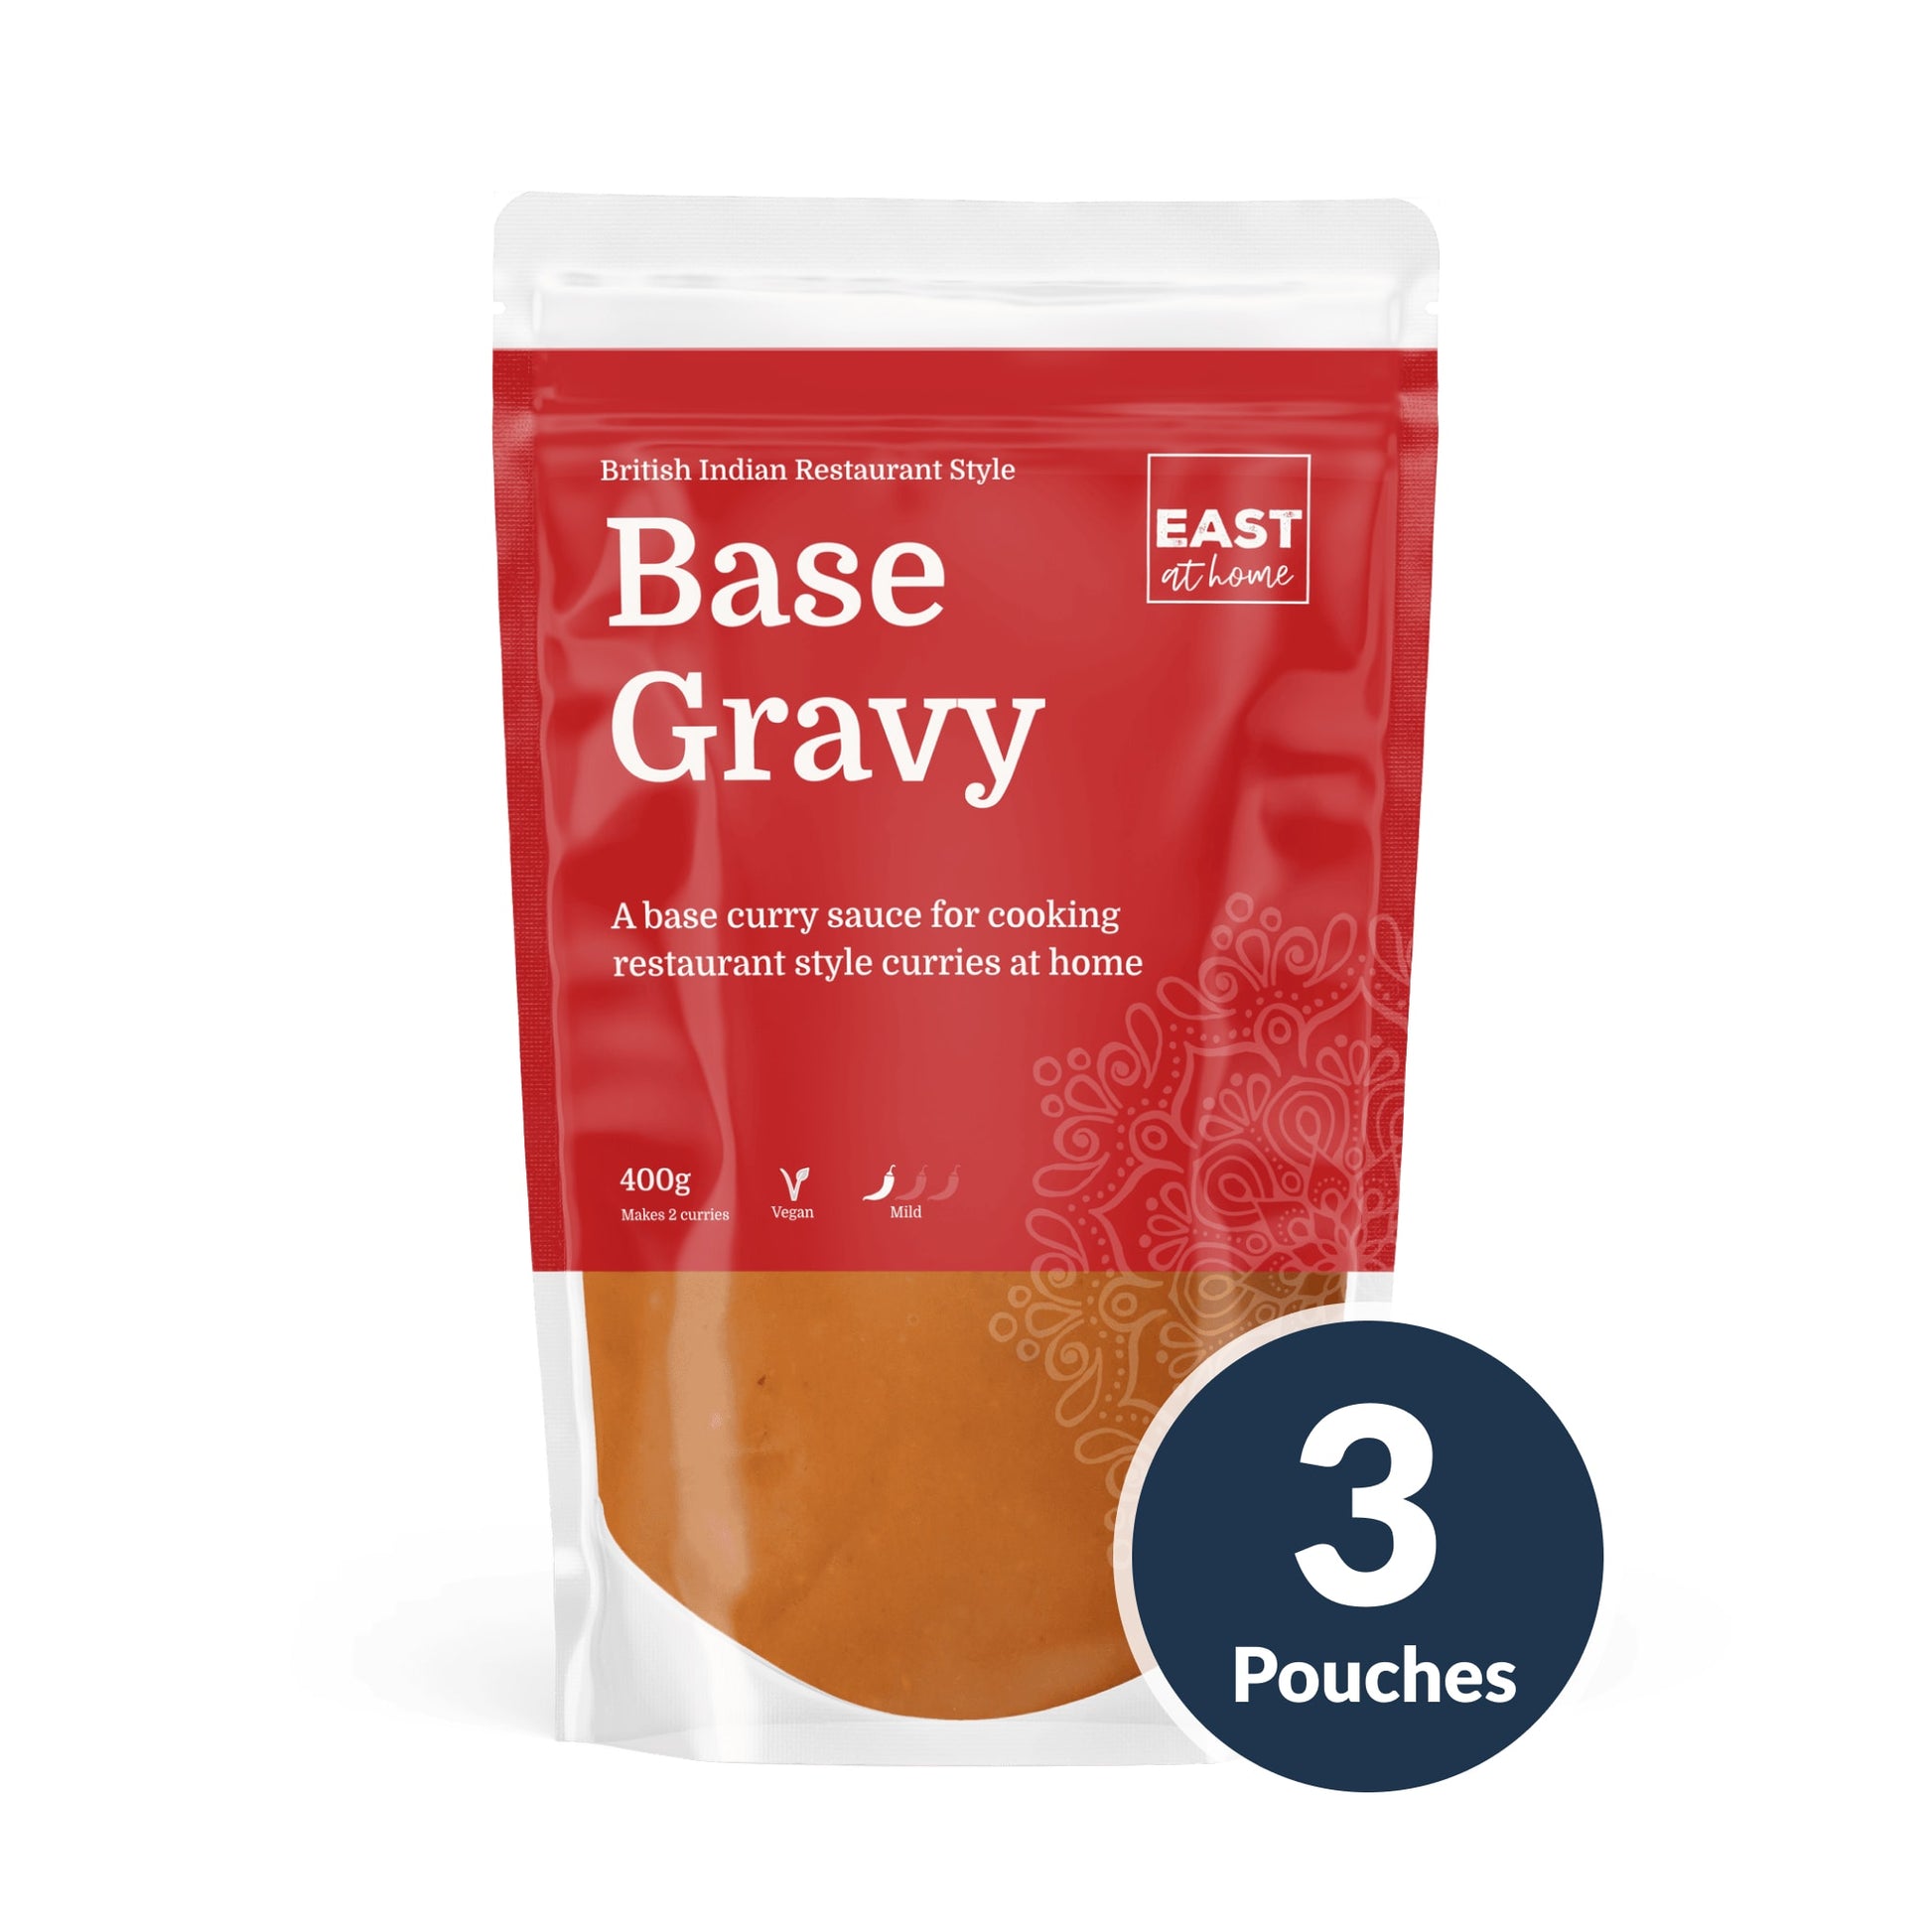 BIR Base Gravy - 3 Pouches